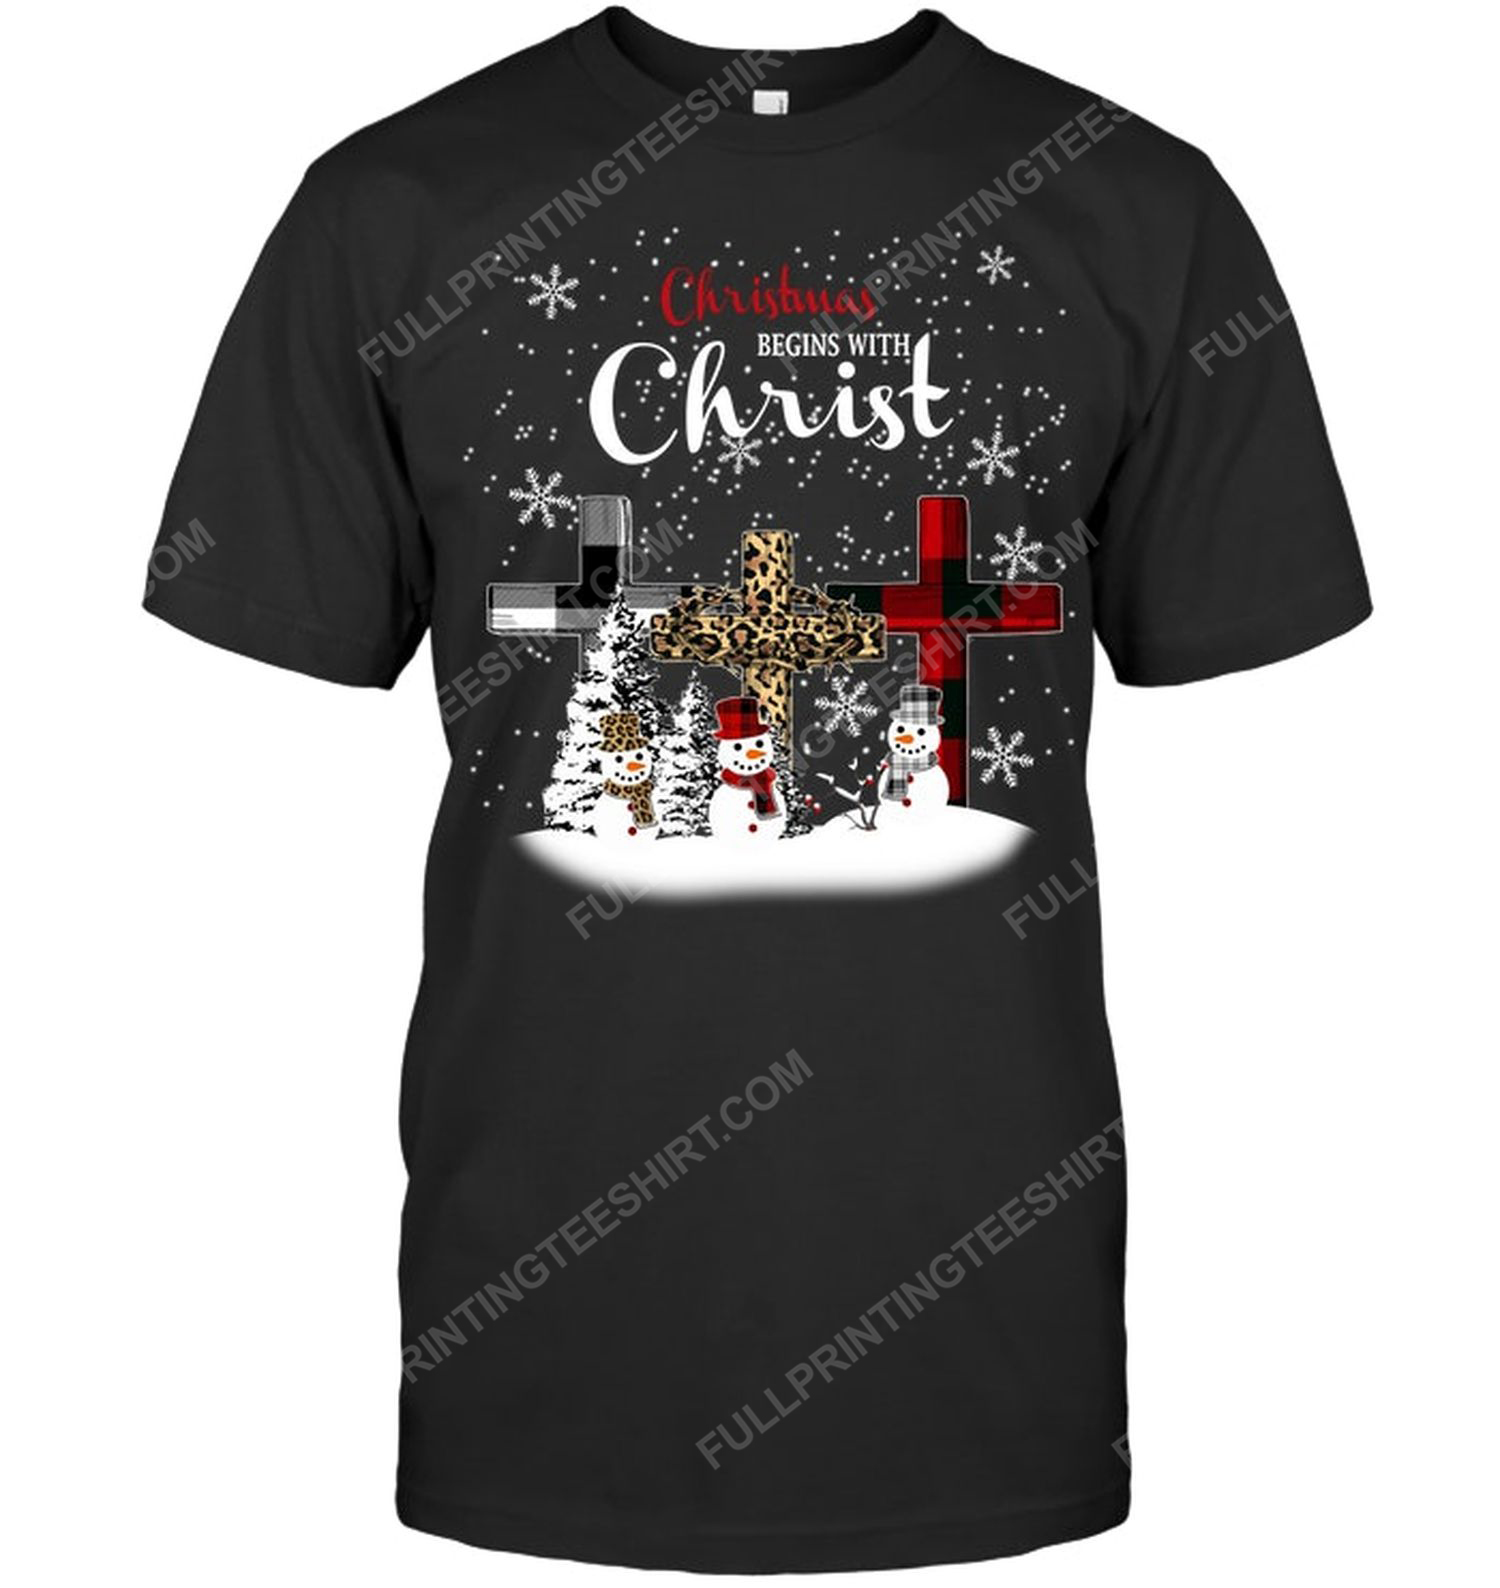 Christmas begins with christ snowman tshirt